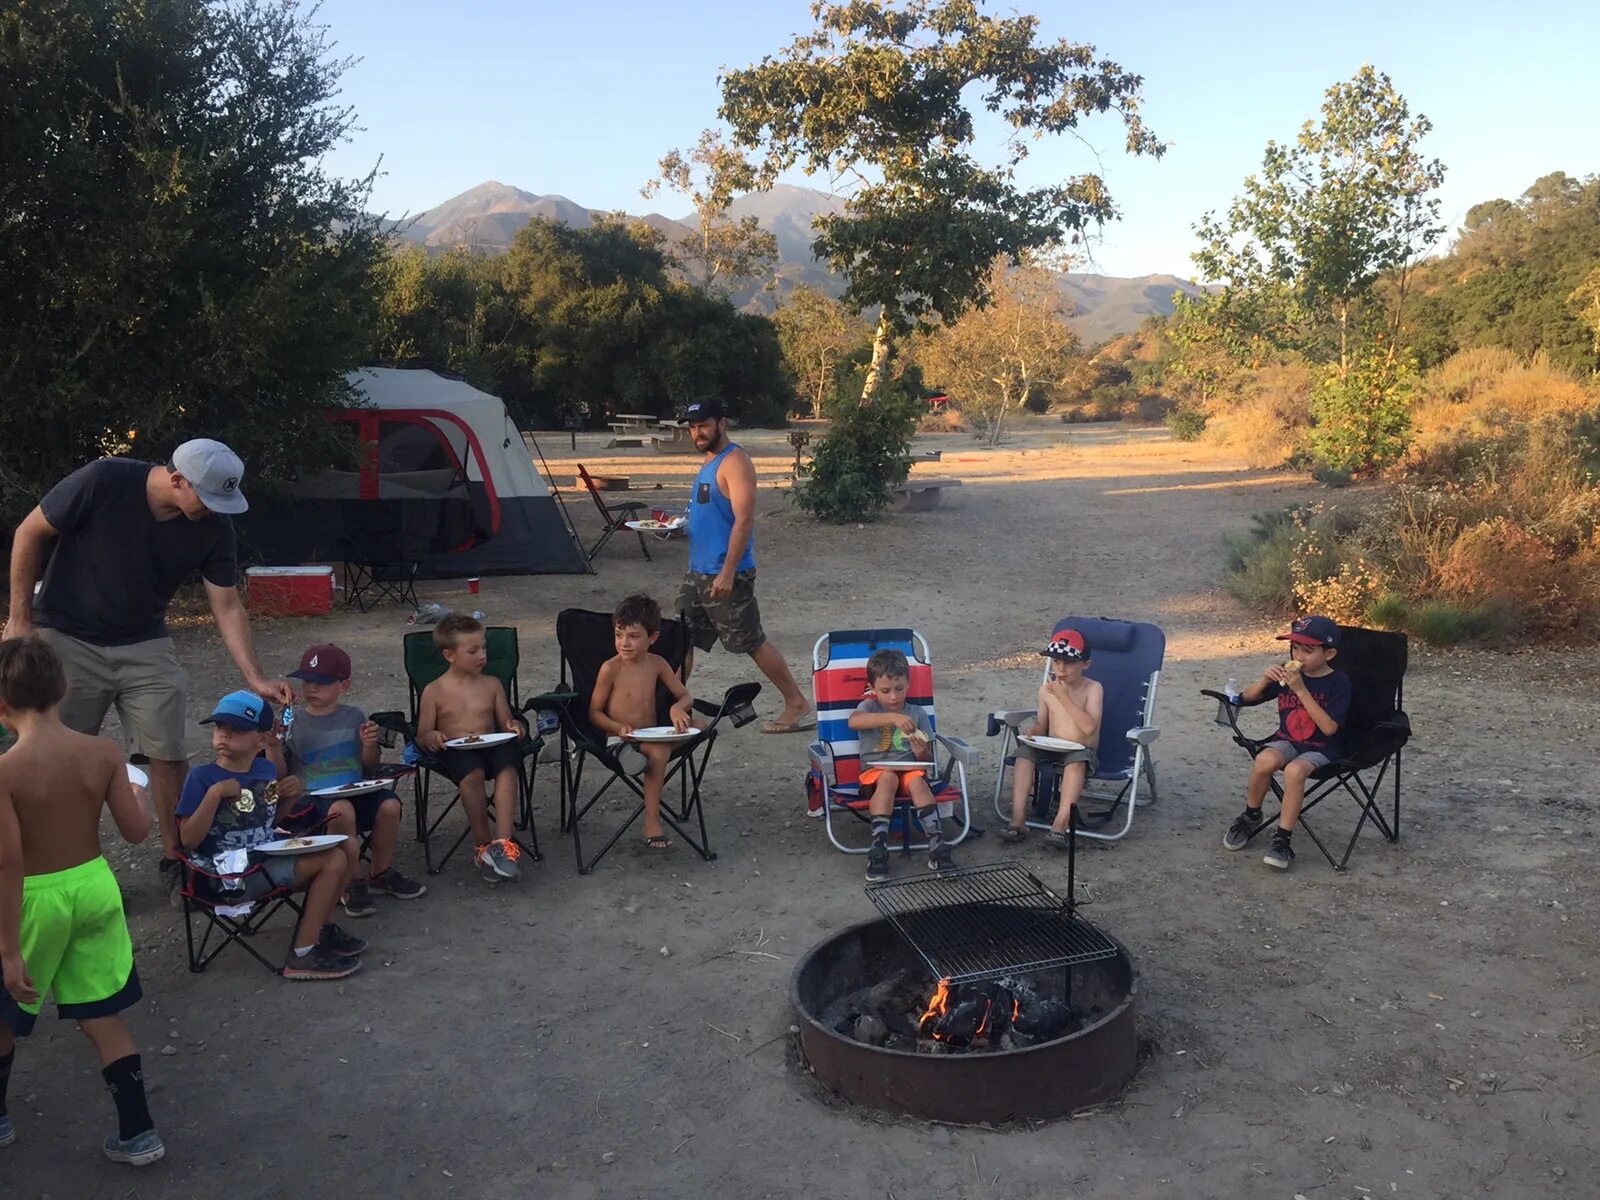 Pee boys outside Camping Америка. Boy pees Camping. Boys on Camping. Boy pees Camping Fire. Camping boys